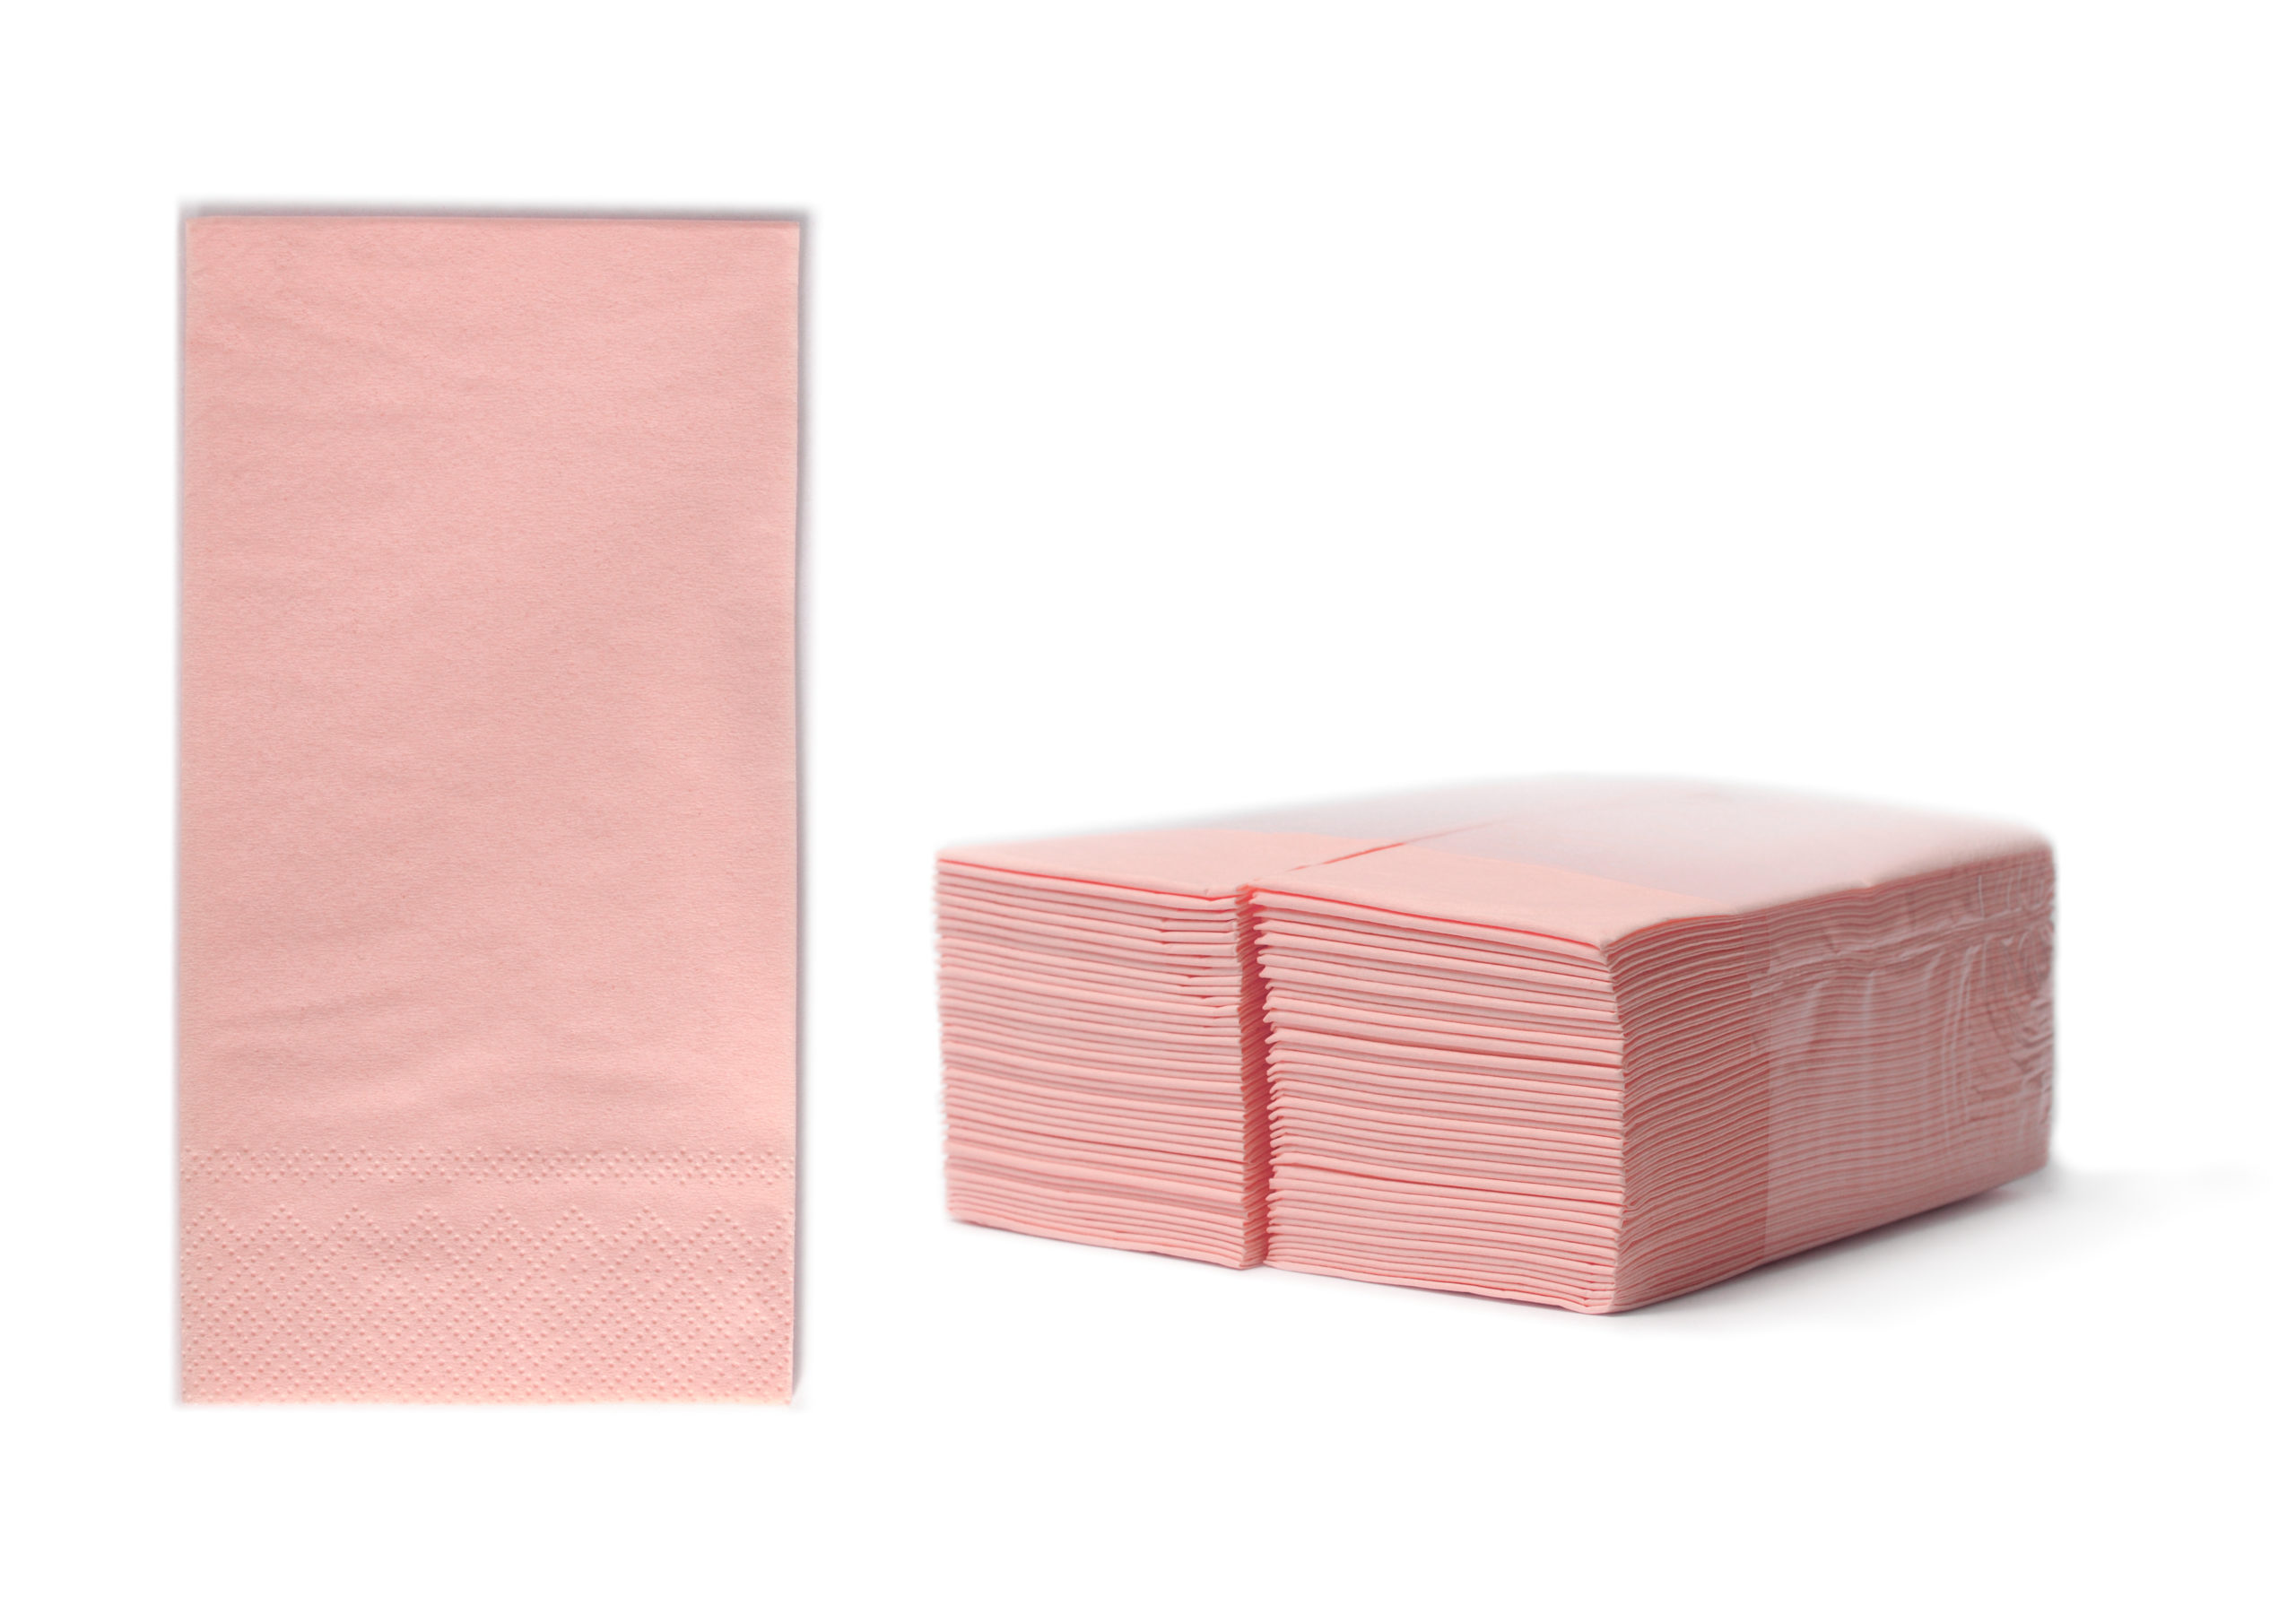 33x33cm- ZELLSTOFF- 1/8 Falz- 2-lagig – pink